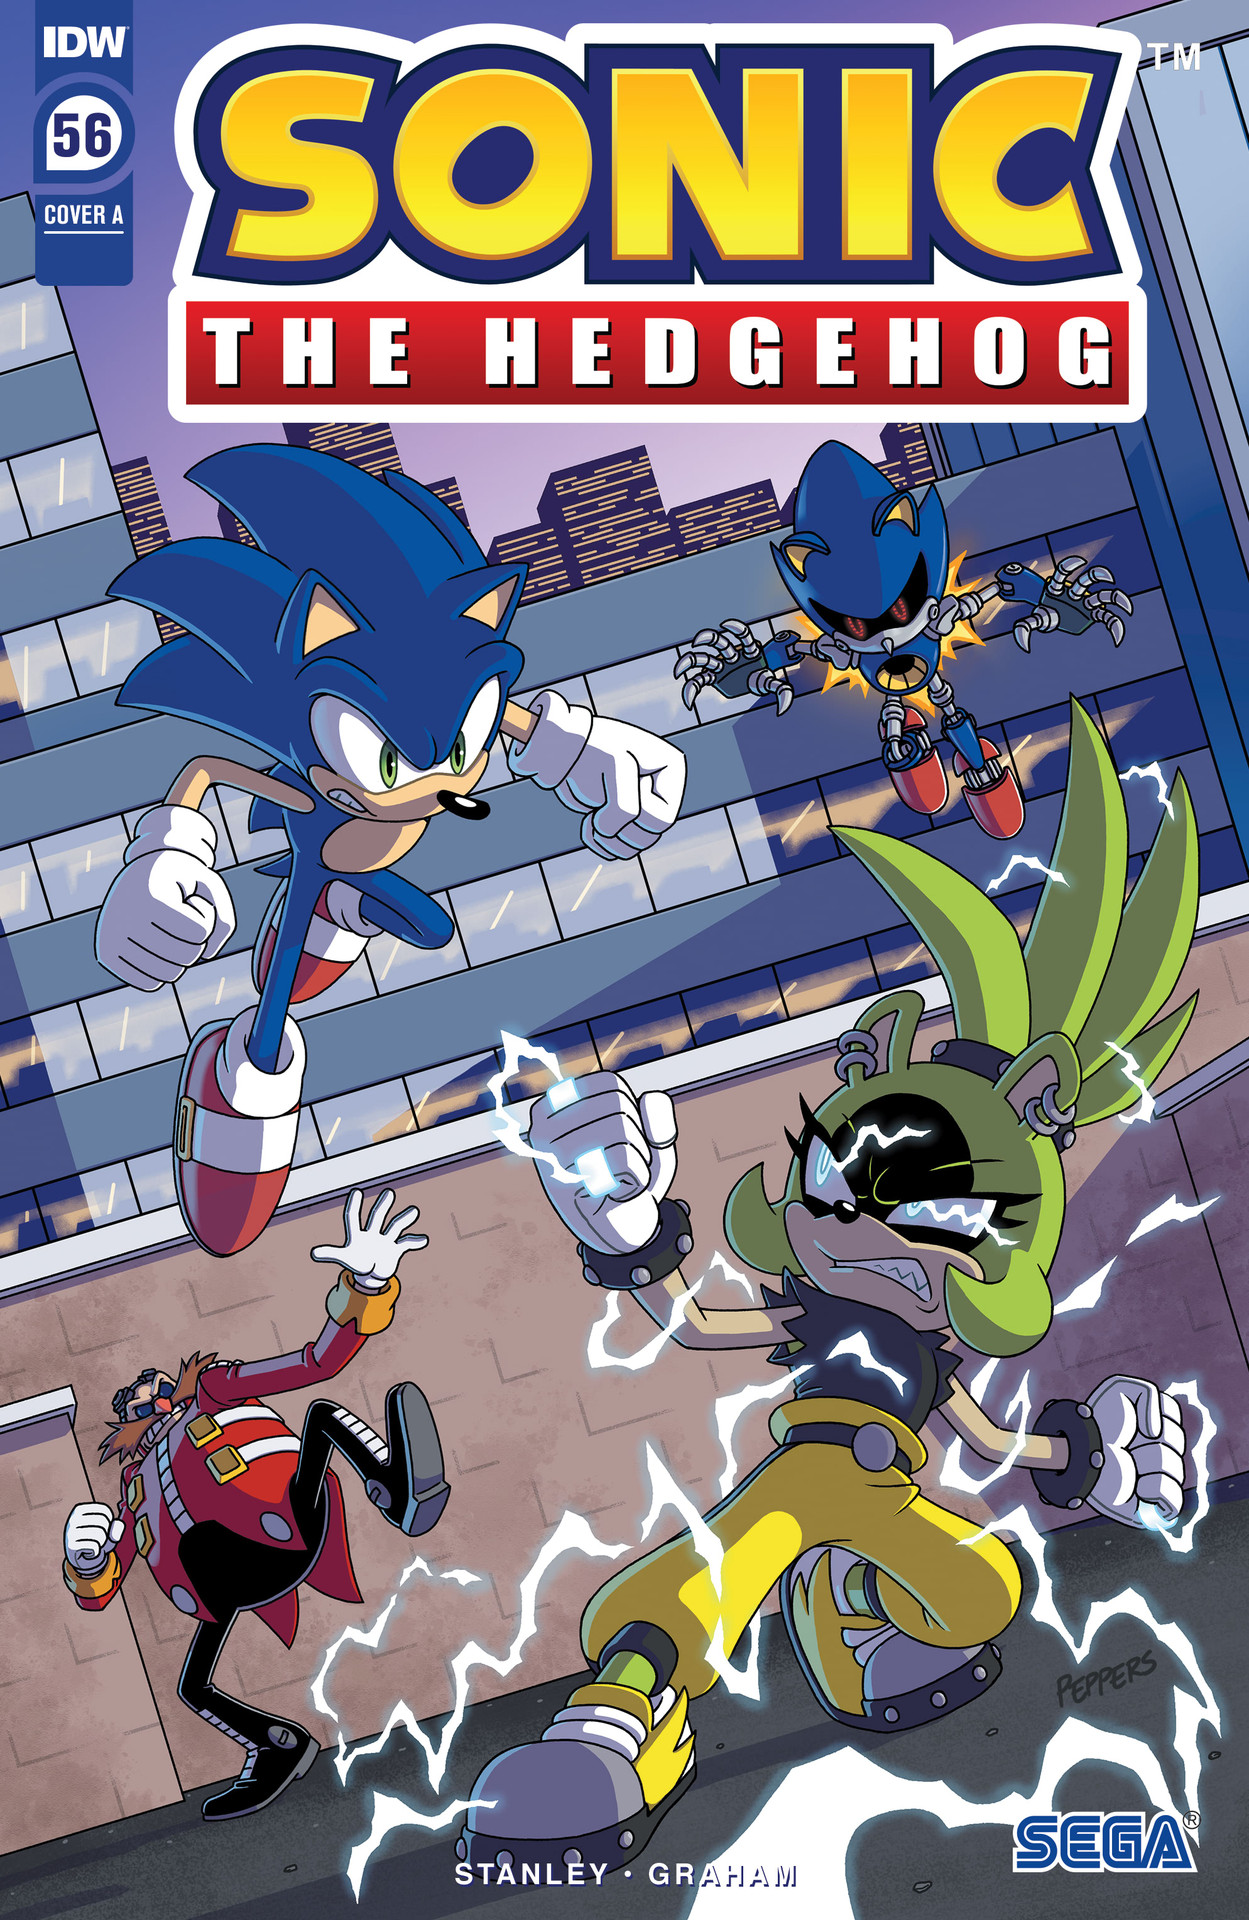 Sonic The Hedgehog IDW (#1-68) - Read Comic Online Sonic The Hedgehog #56